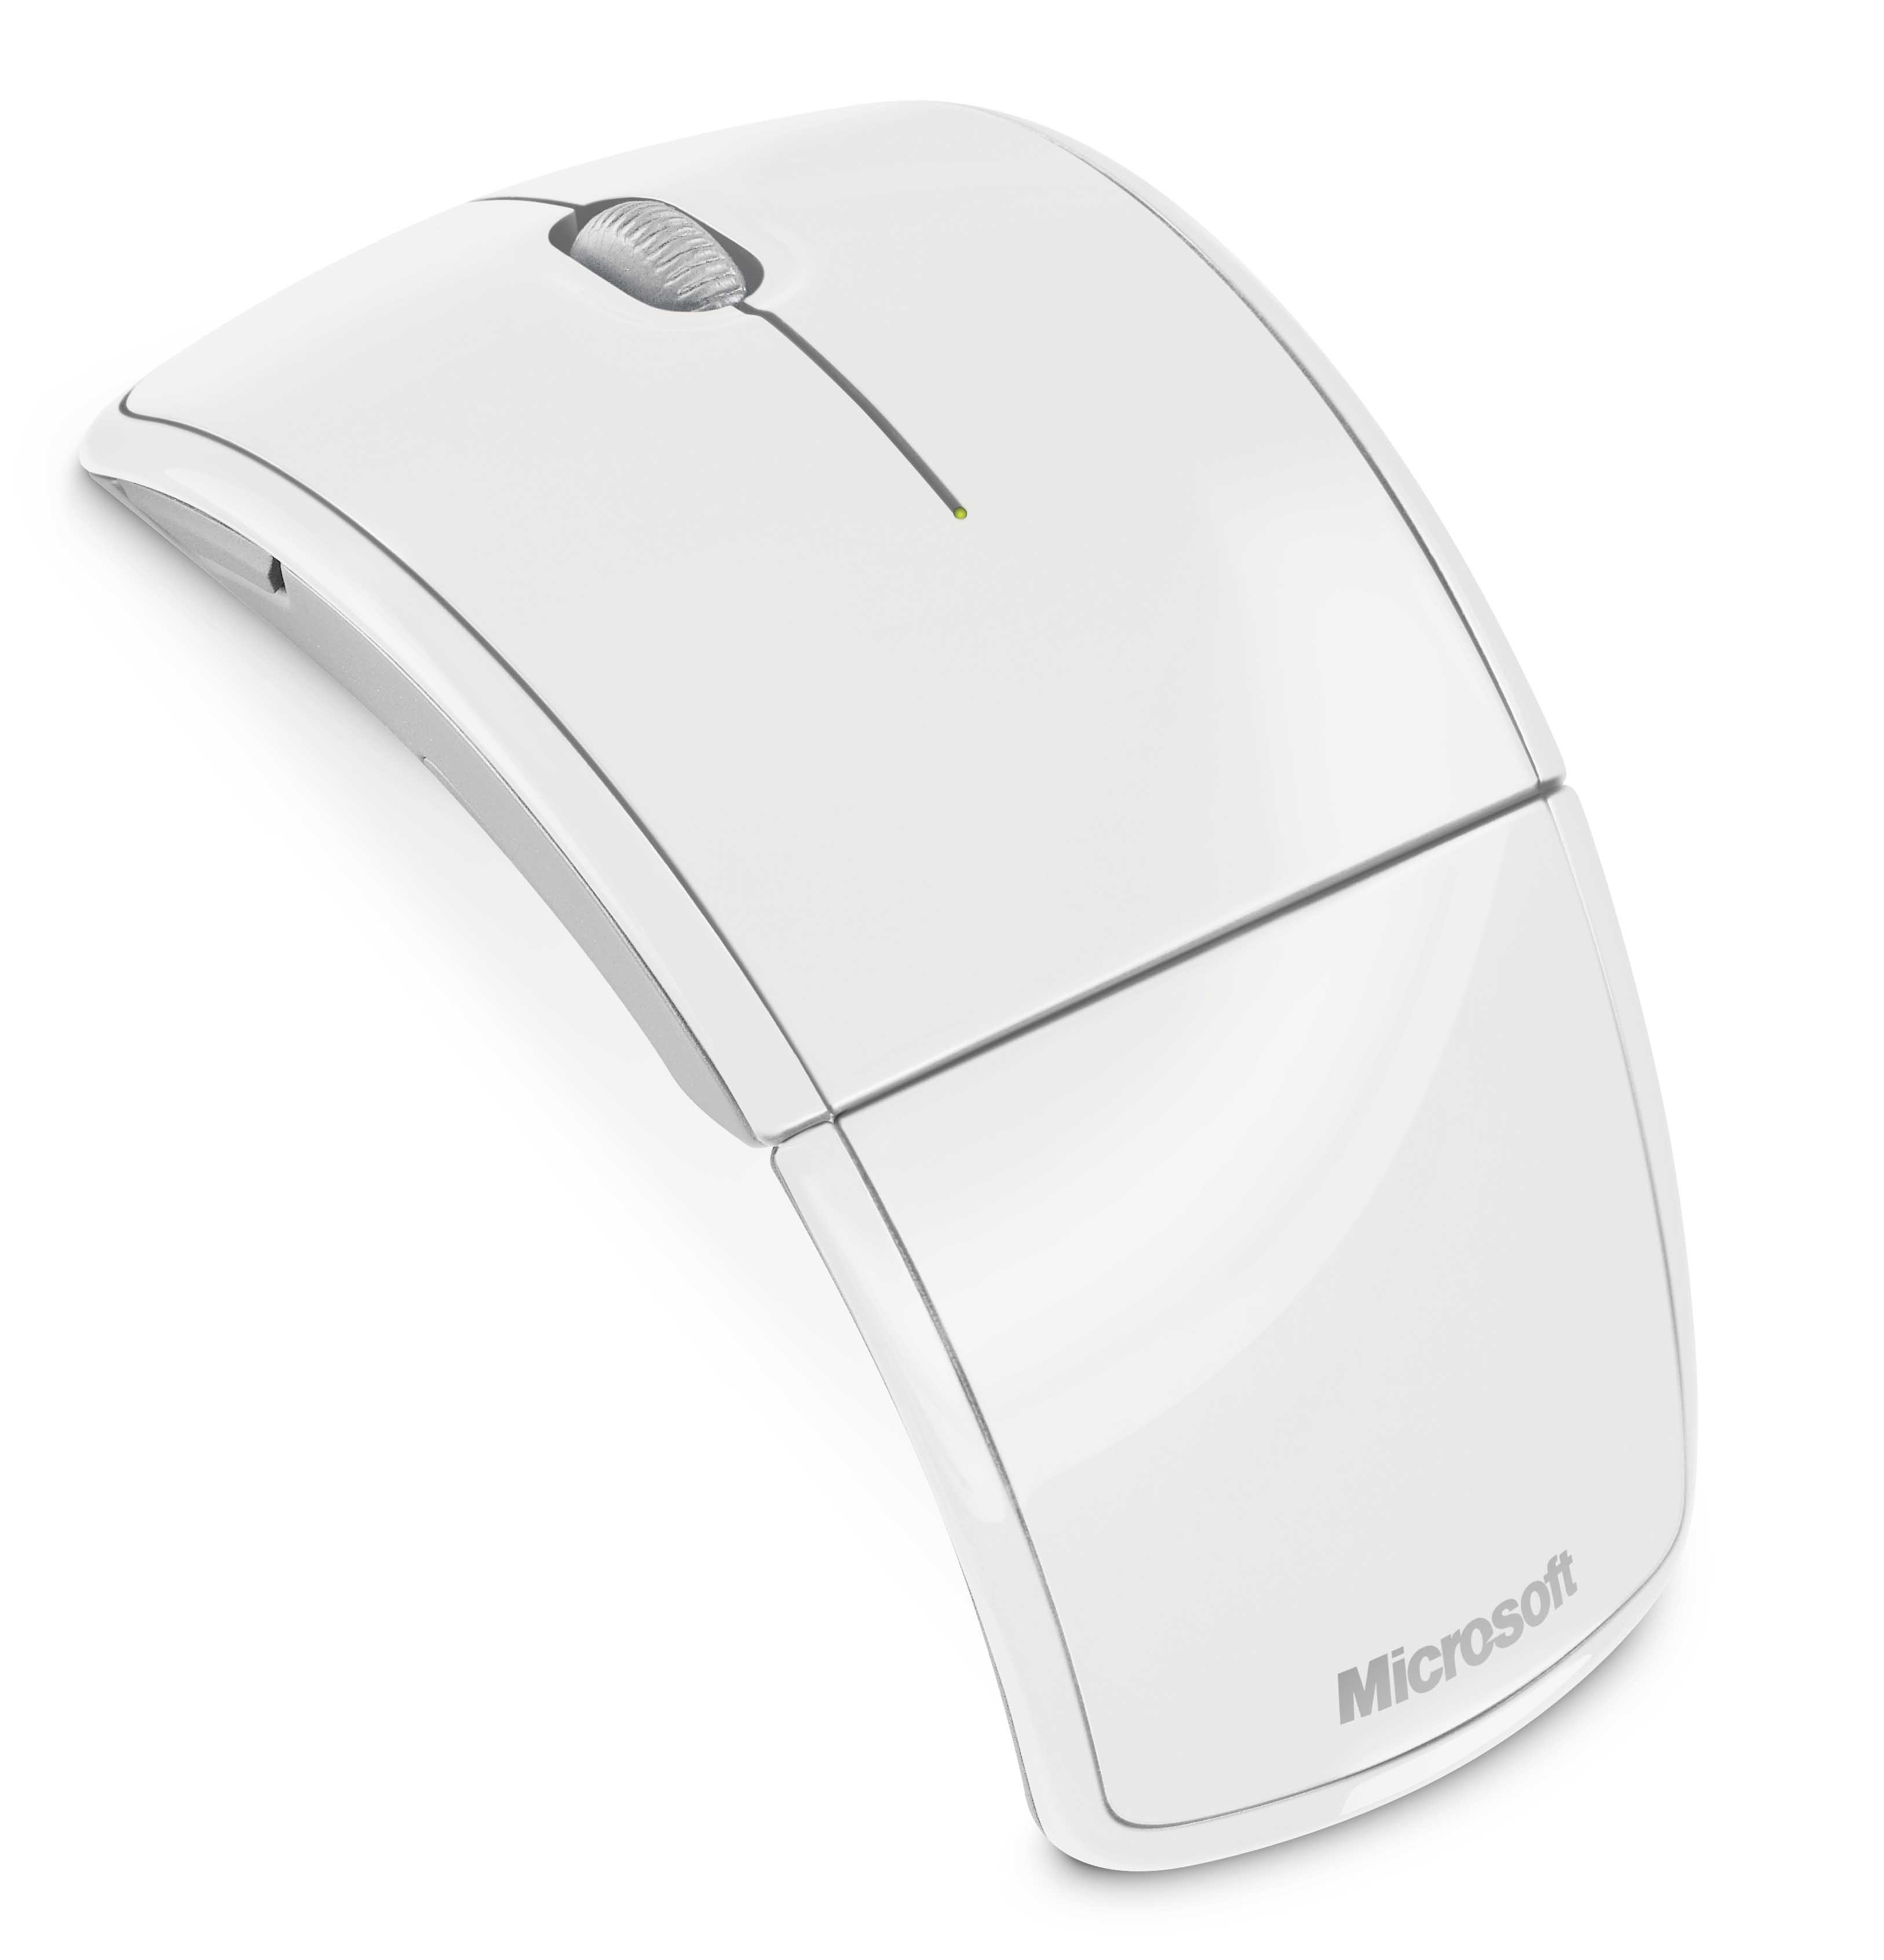 Мышь arc. Мышка Microsoft Arc беспроводная. Мышь Майкрософт беспроводная складная. Мышь Microsoft Arc Mouse White USB. Беспроводная компактная мышь Microsoft Arc Mouse.